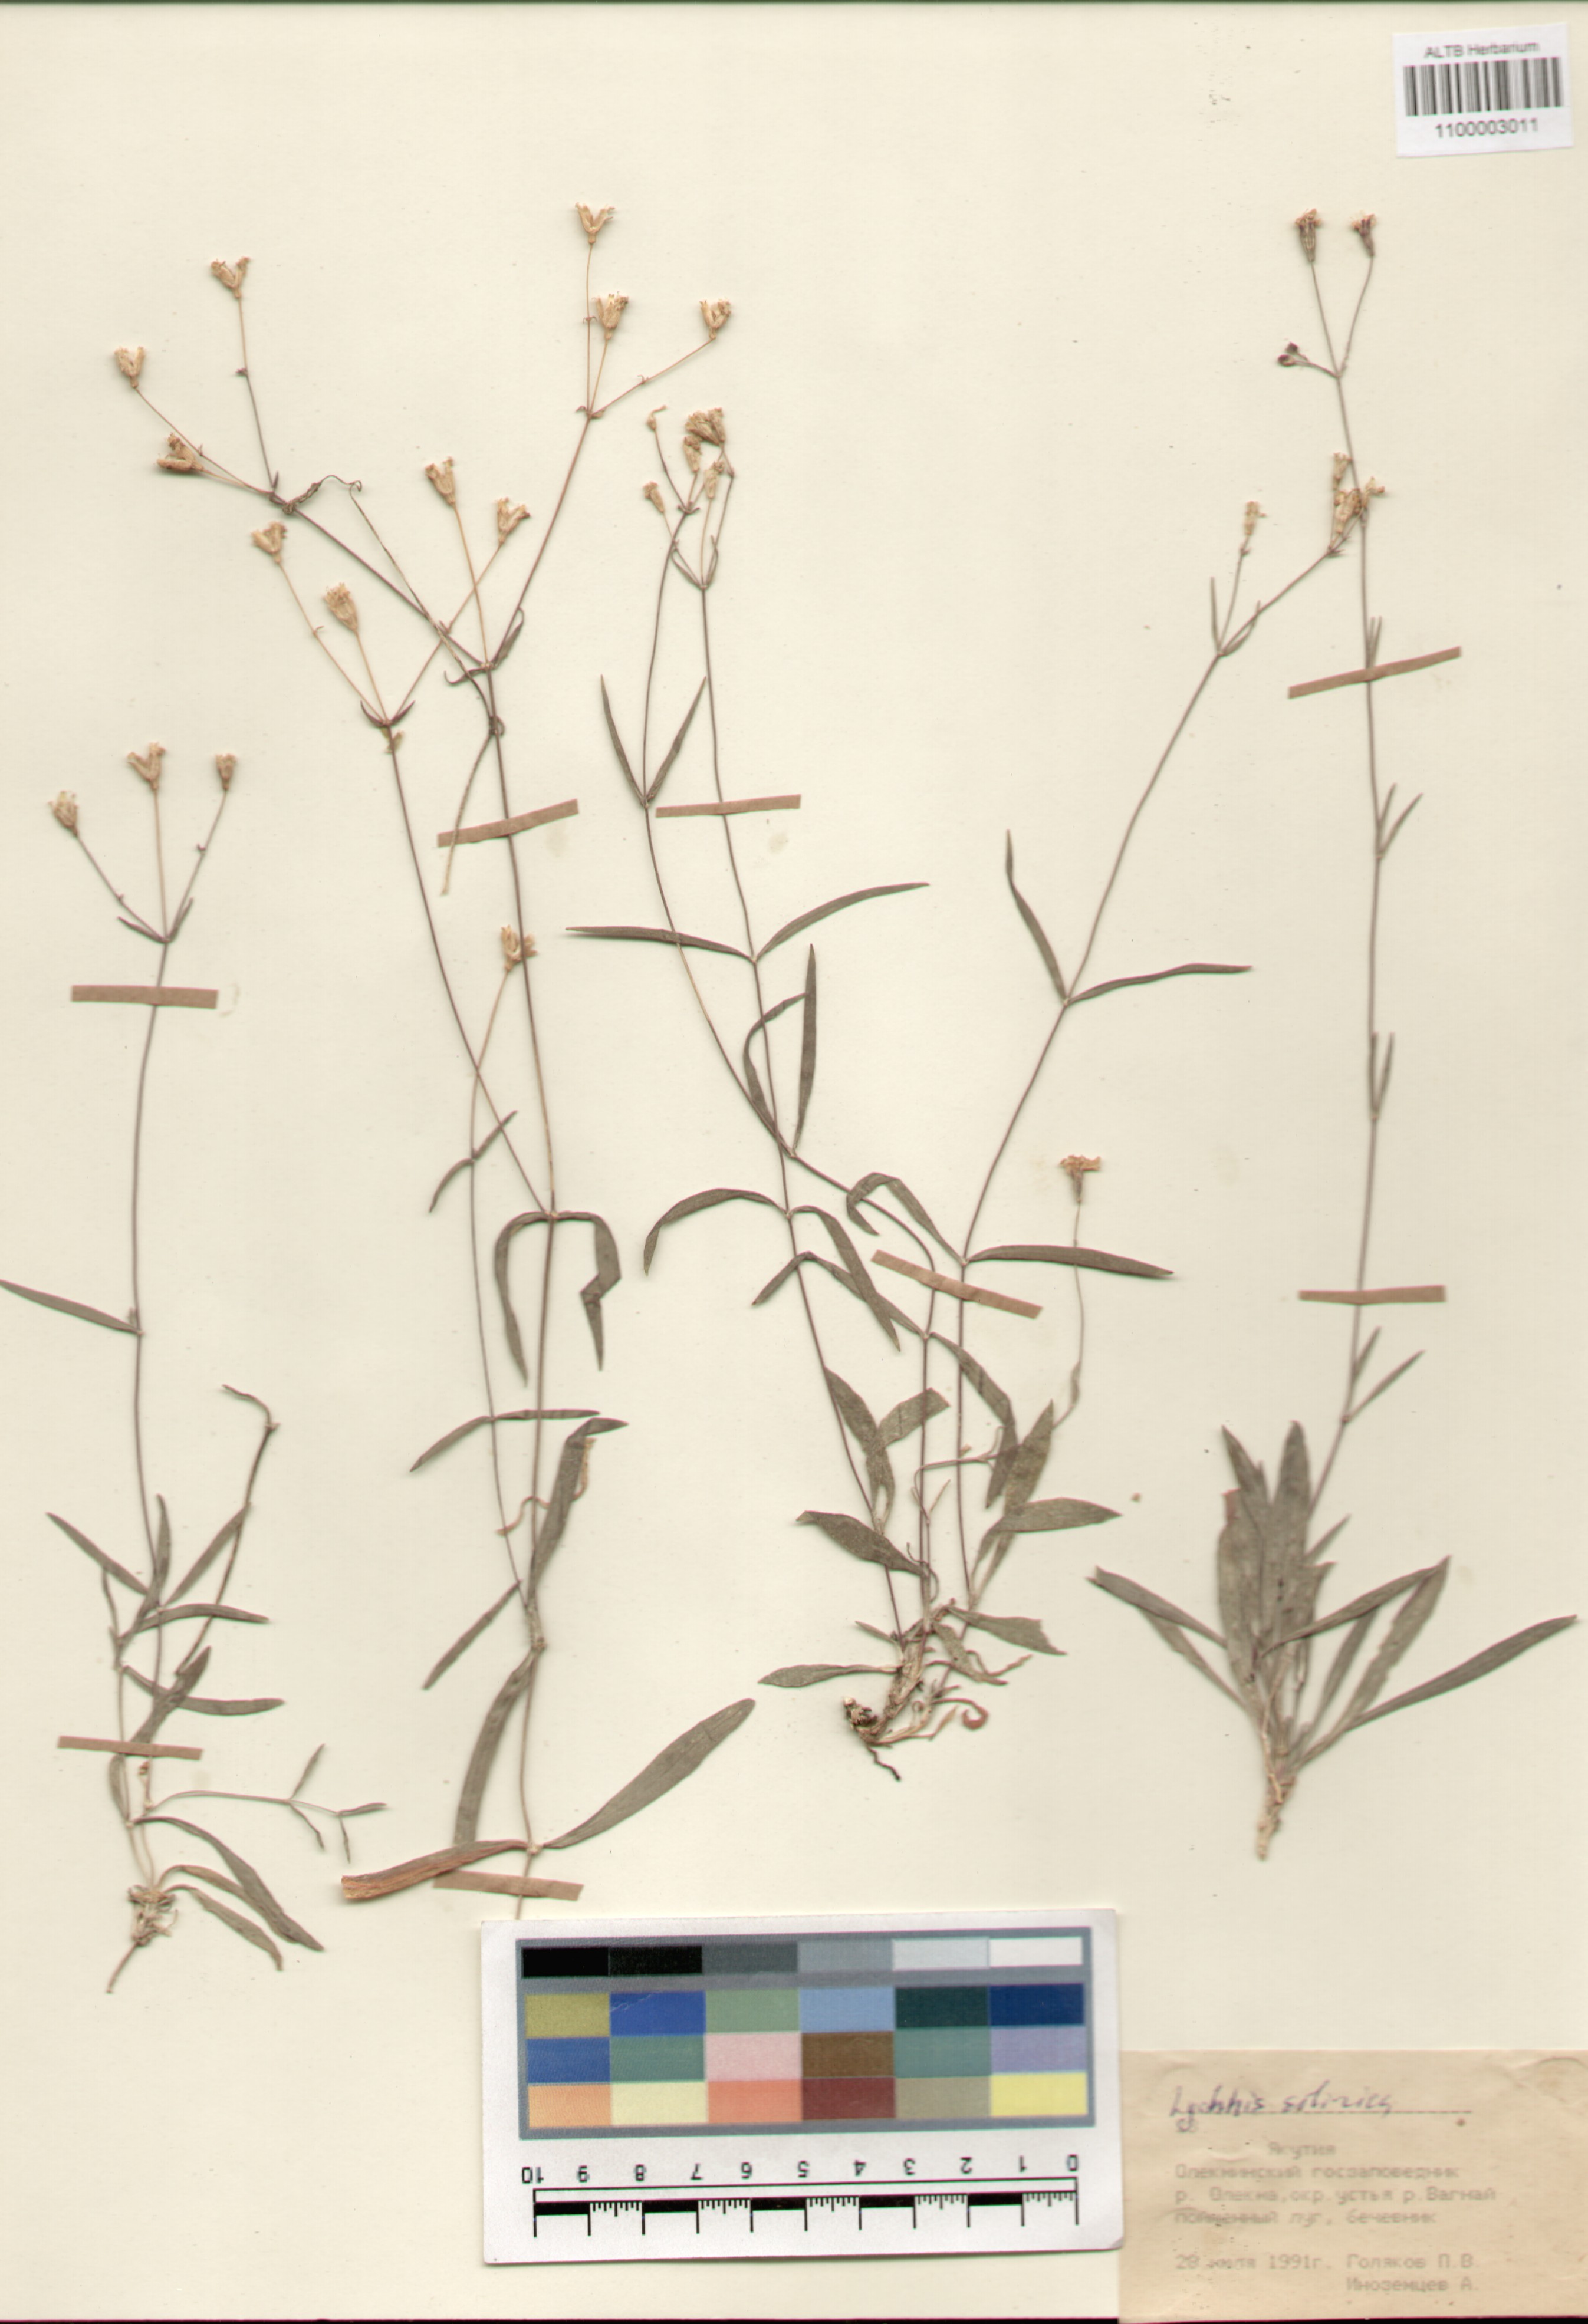 Caryophyllaceae,Lychnis sibirica L.